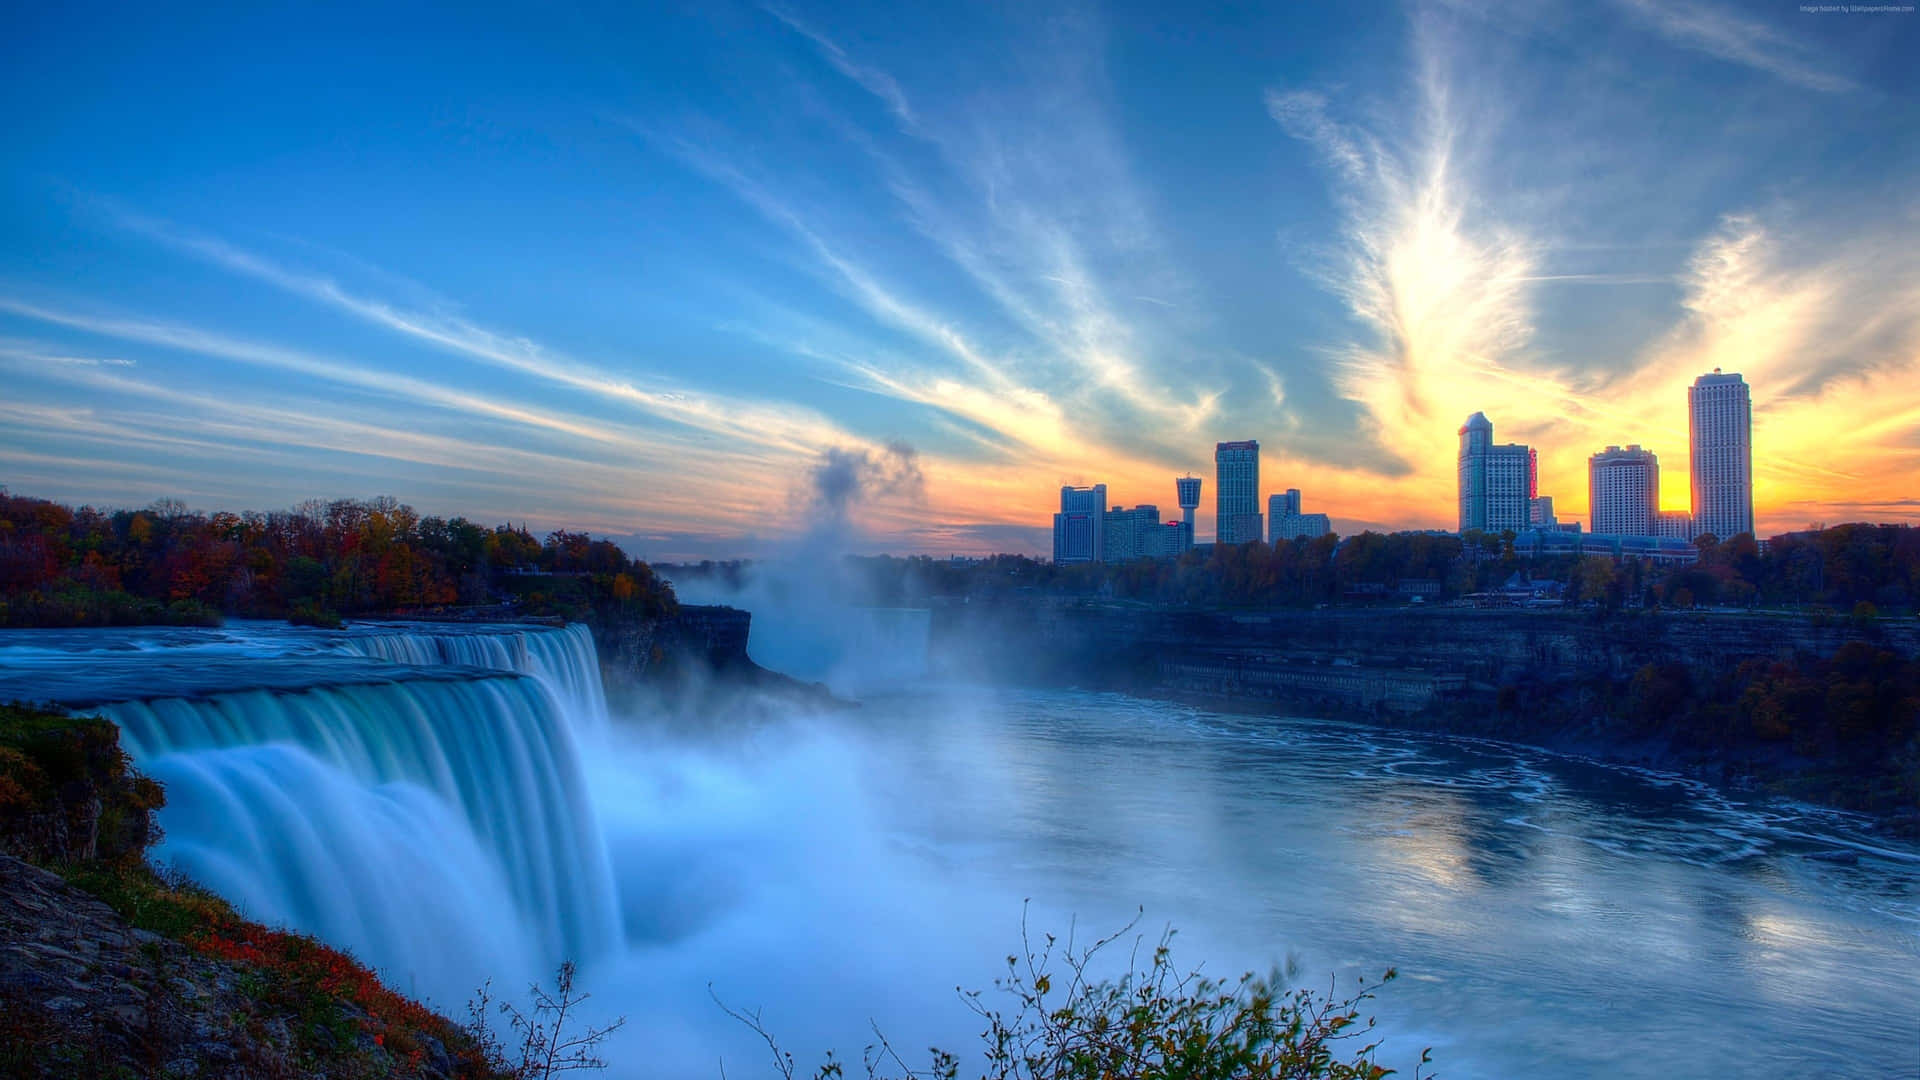 Feel the Magic of Niagara Falls